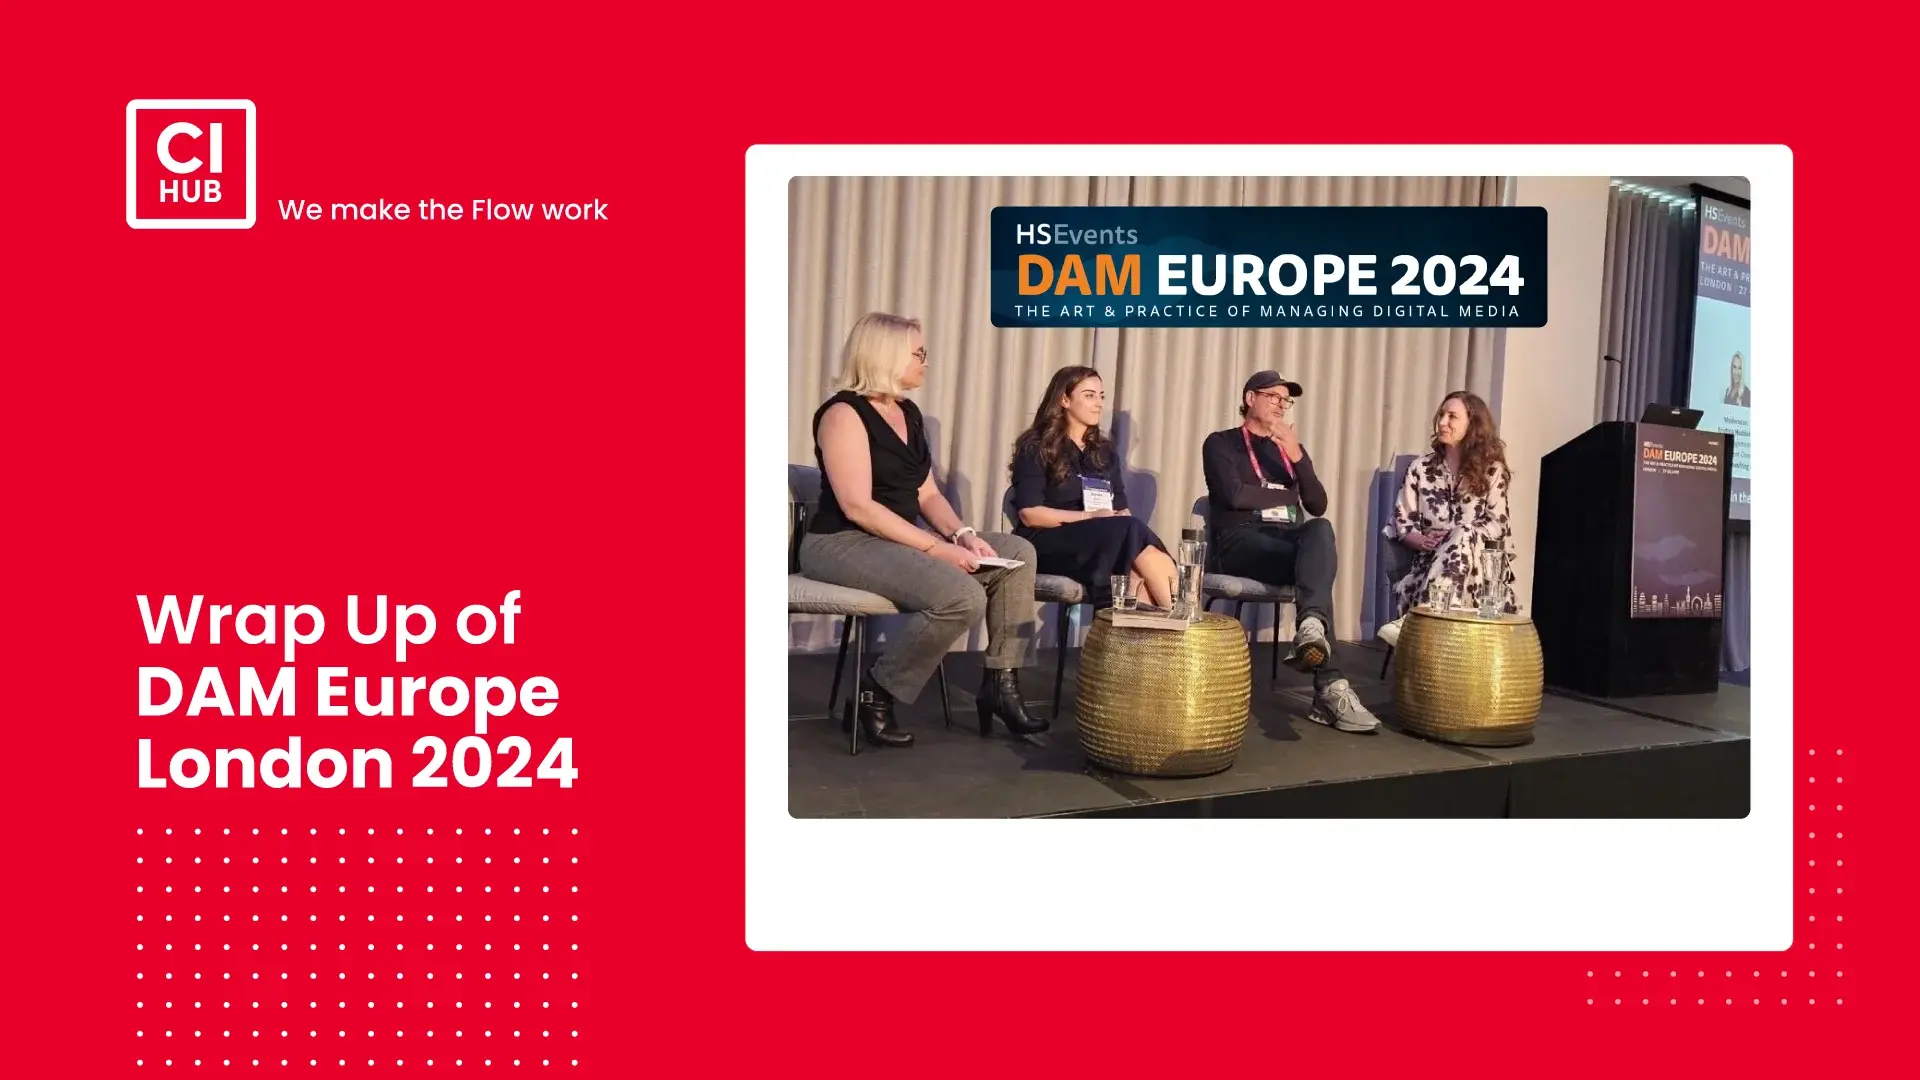 CI HUB attended DAM Europe 2024 as a Lead Sponsor